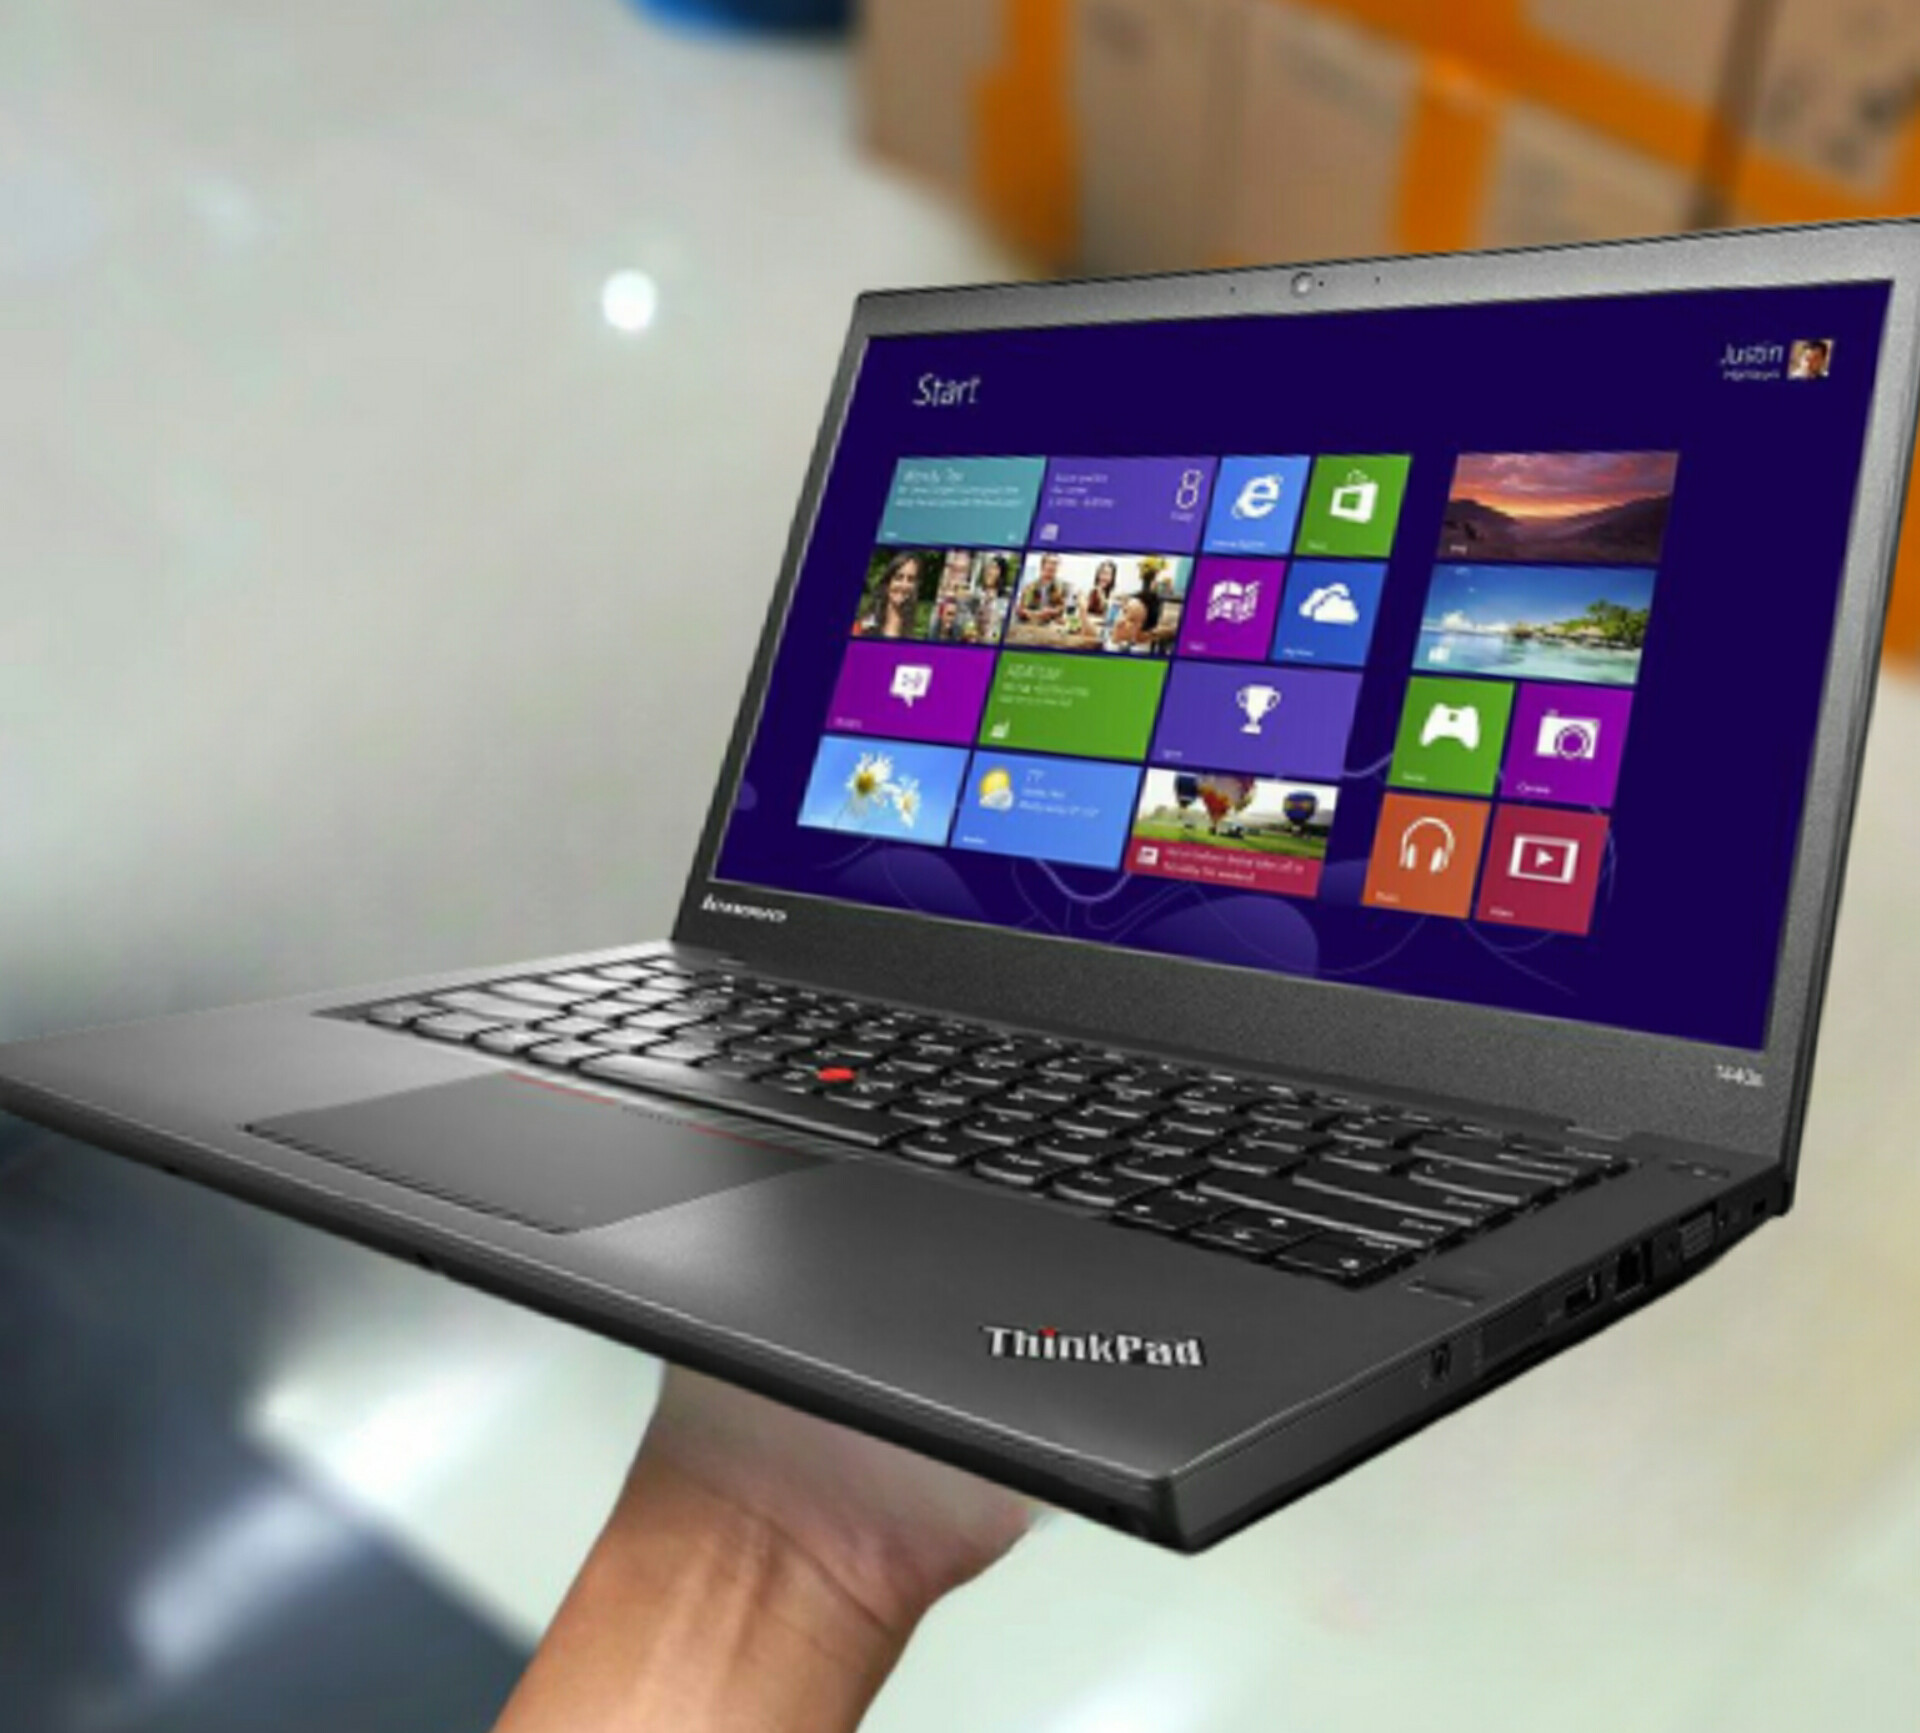 Lenovo ThinkPad L450 Laptop Price in Pakistan